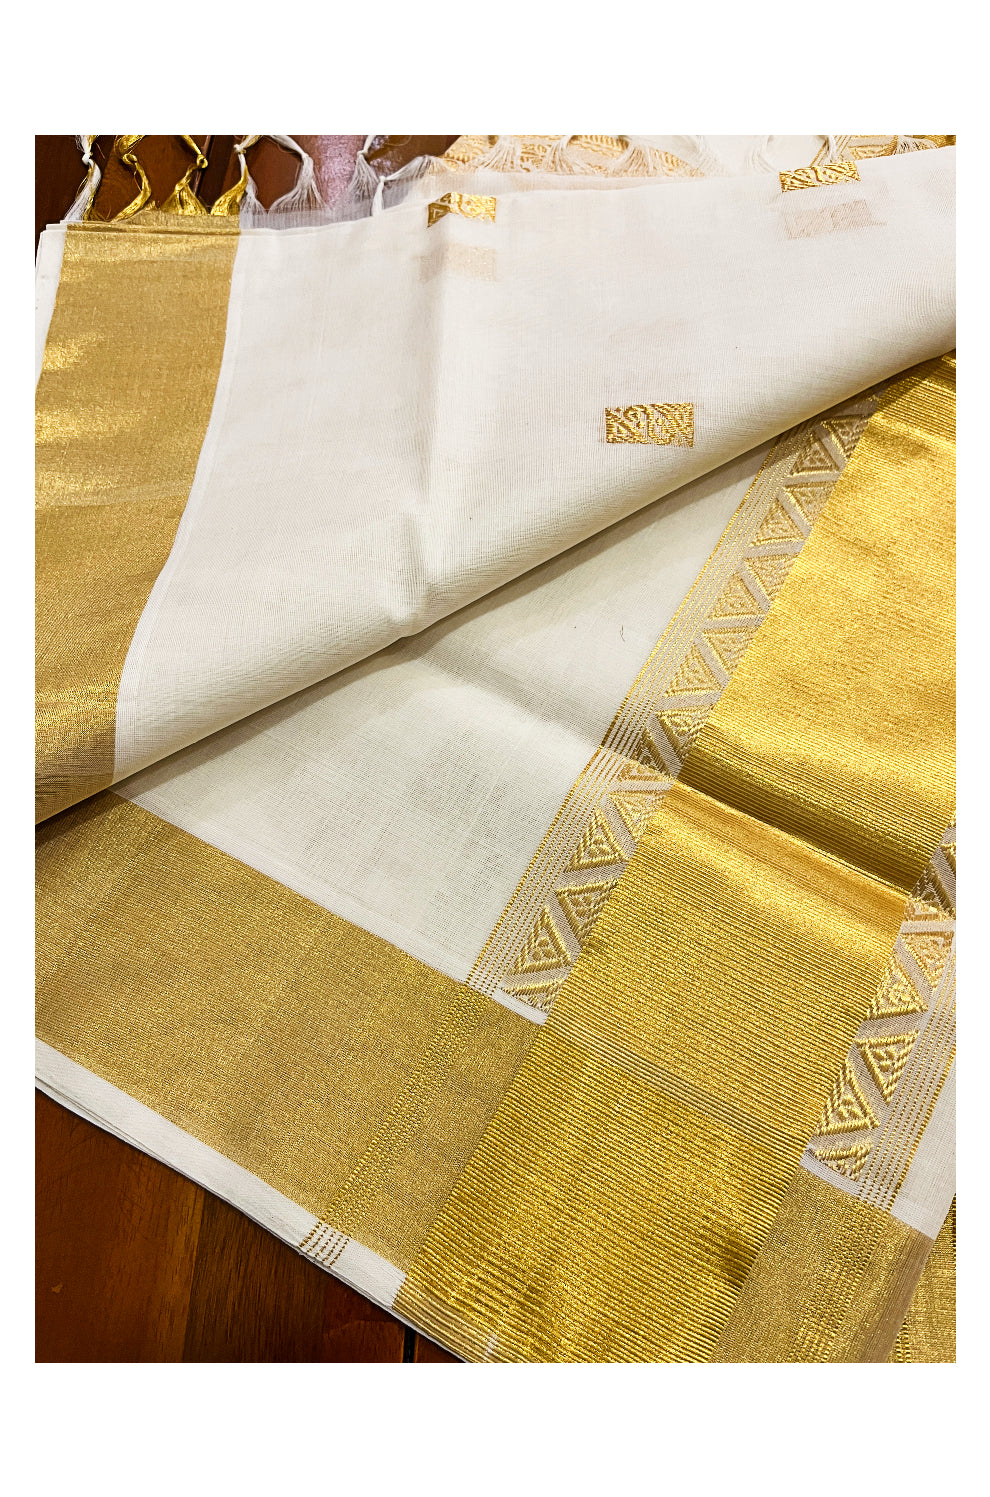 Southloom Premium Handloom Cotton Kerala Saree with Paisley Heavy Woven Works